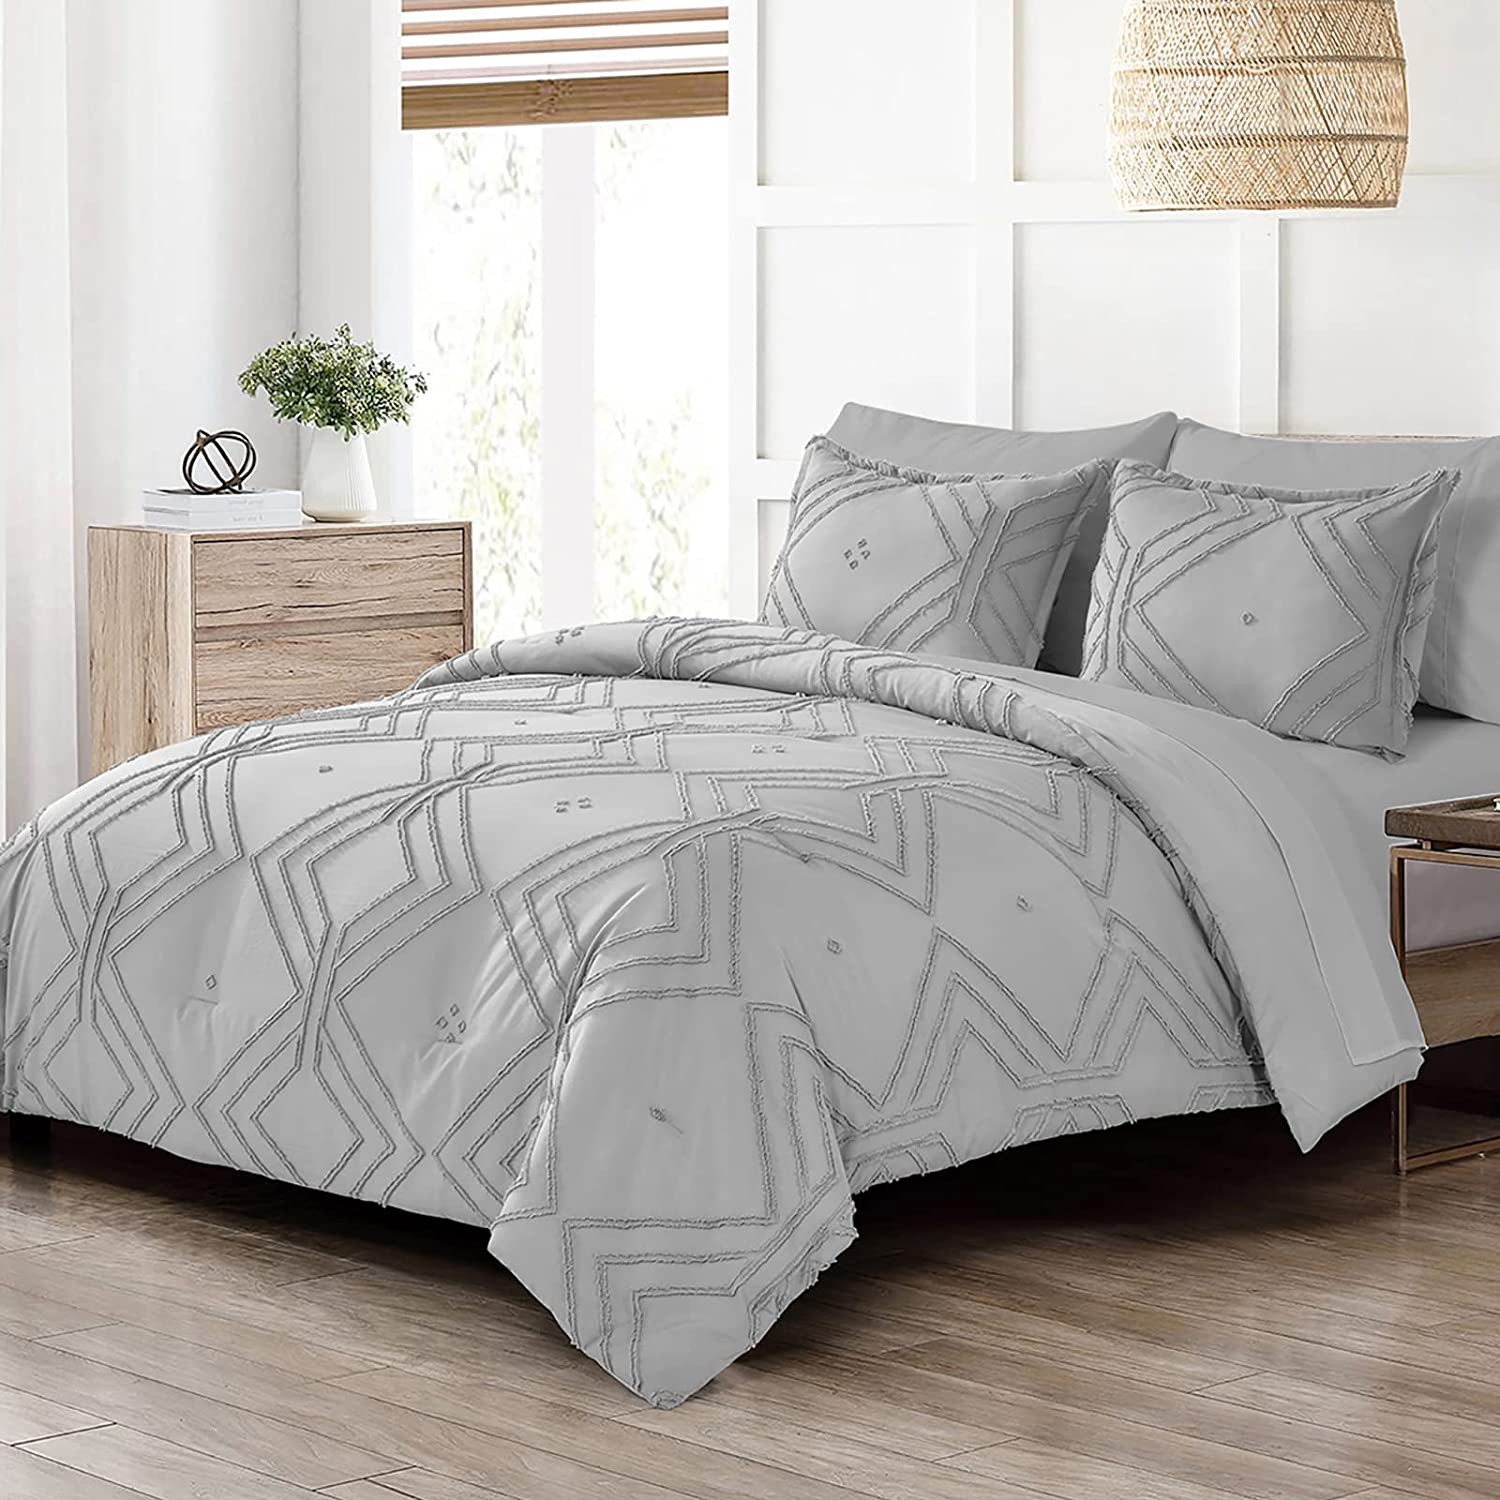 Shatex Tufted Comforter Twin XL Bedding Set- 2 Piece All Season